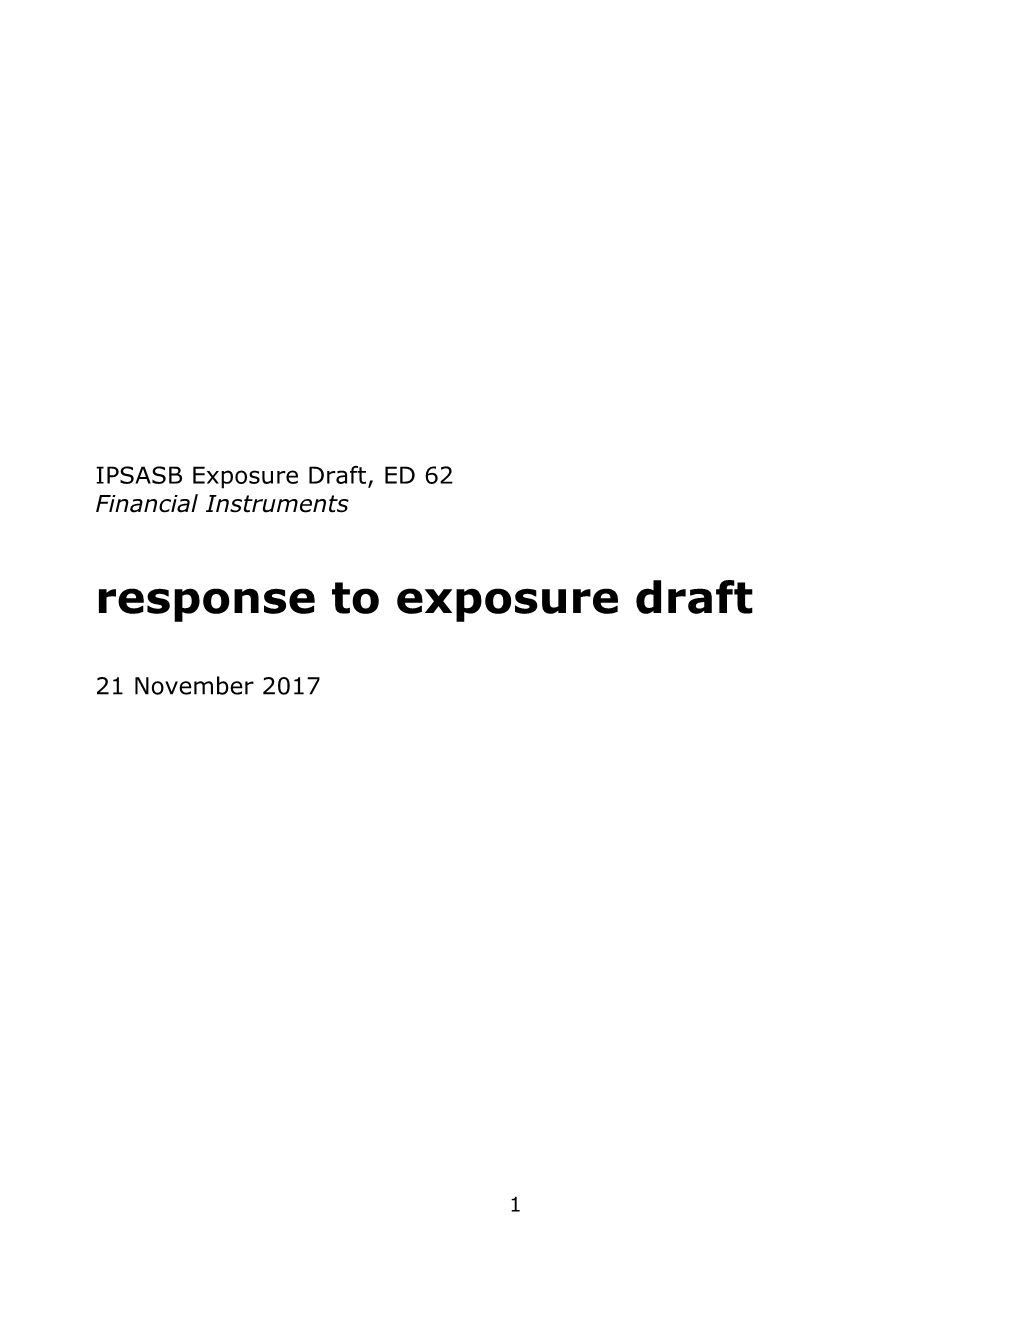 IPSASB Exposure Draft, ED 62